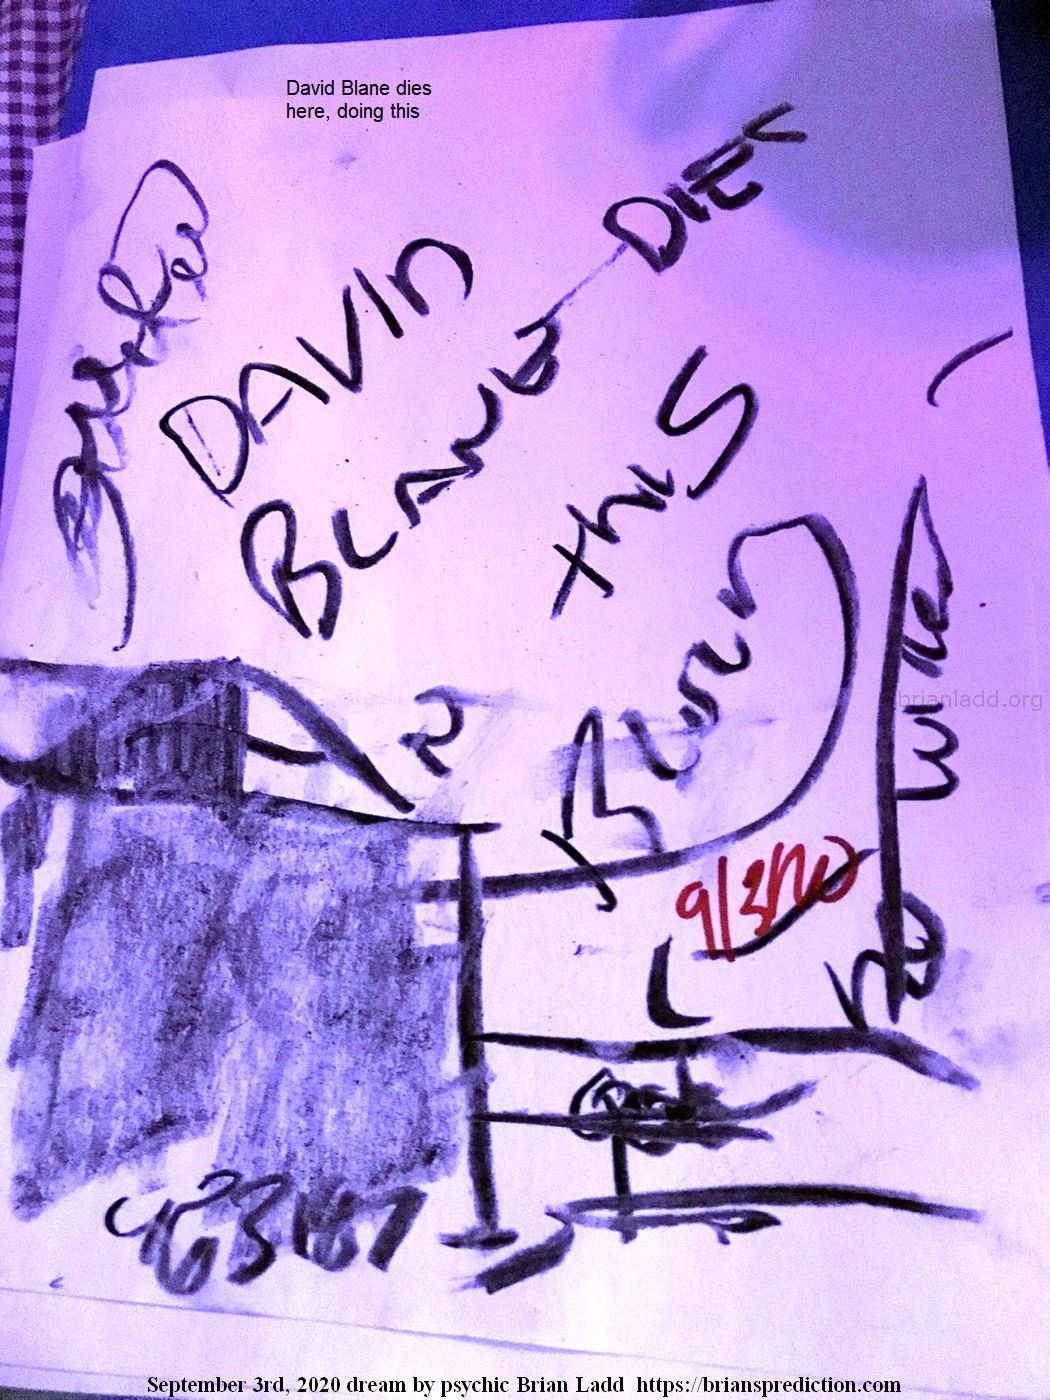 13555 3 September 2020 6 - David Blane Dies Here, Doing This....
David Blane Dies Here, Doing This.
